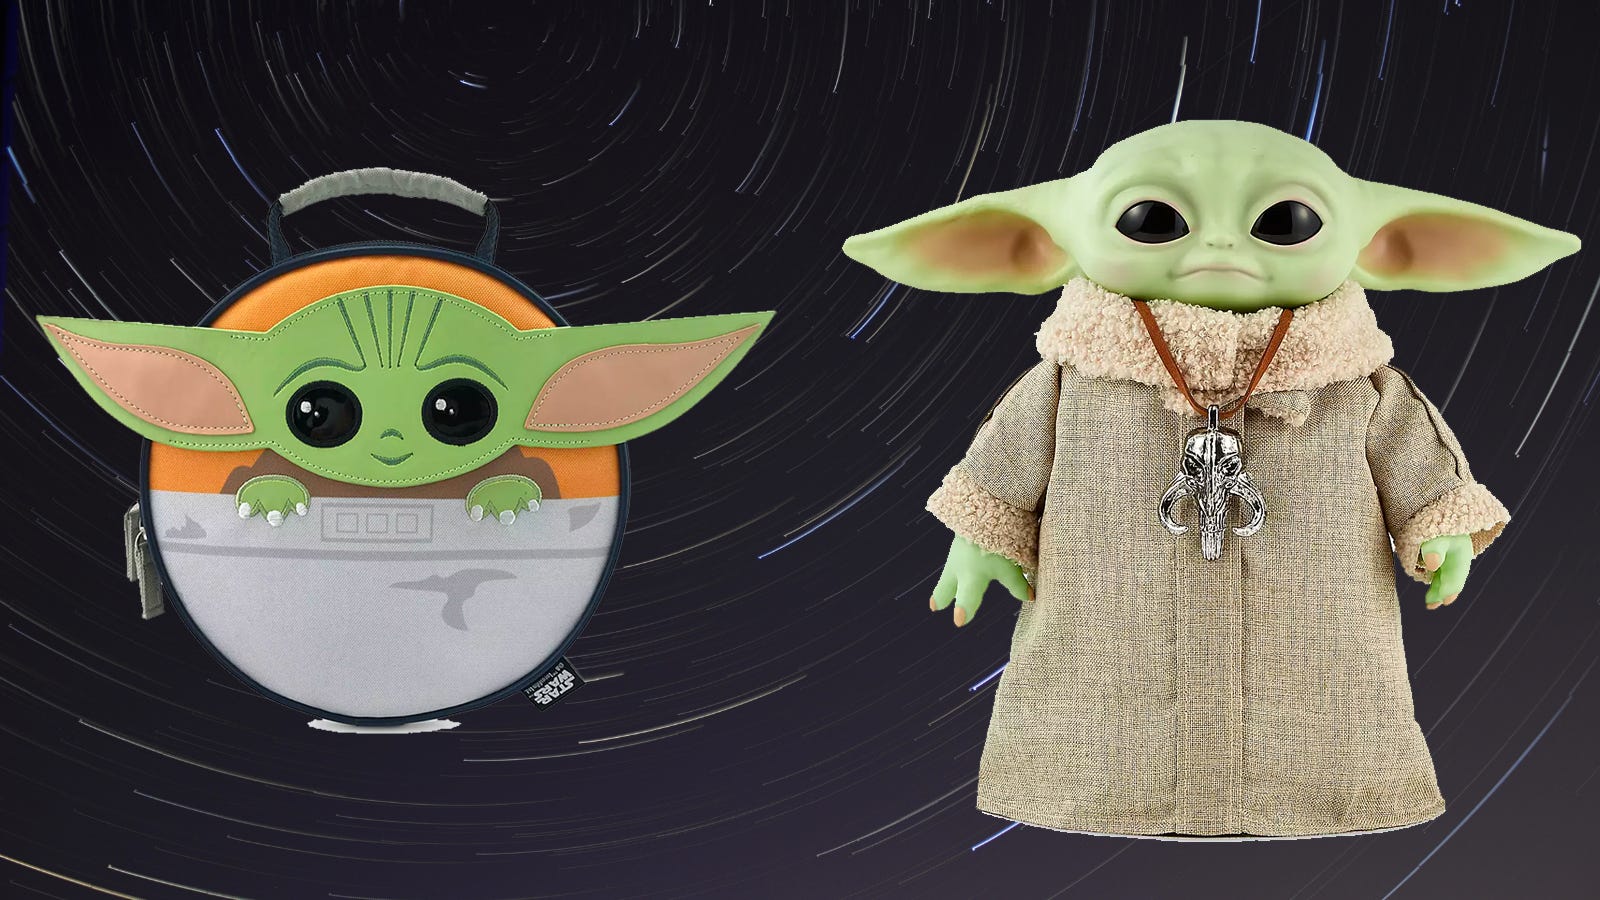 Details about   Baby Yoda The Child Throw Blanket 40x50 Disney Star Wars Mandalorian Grogu Soft 